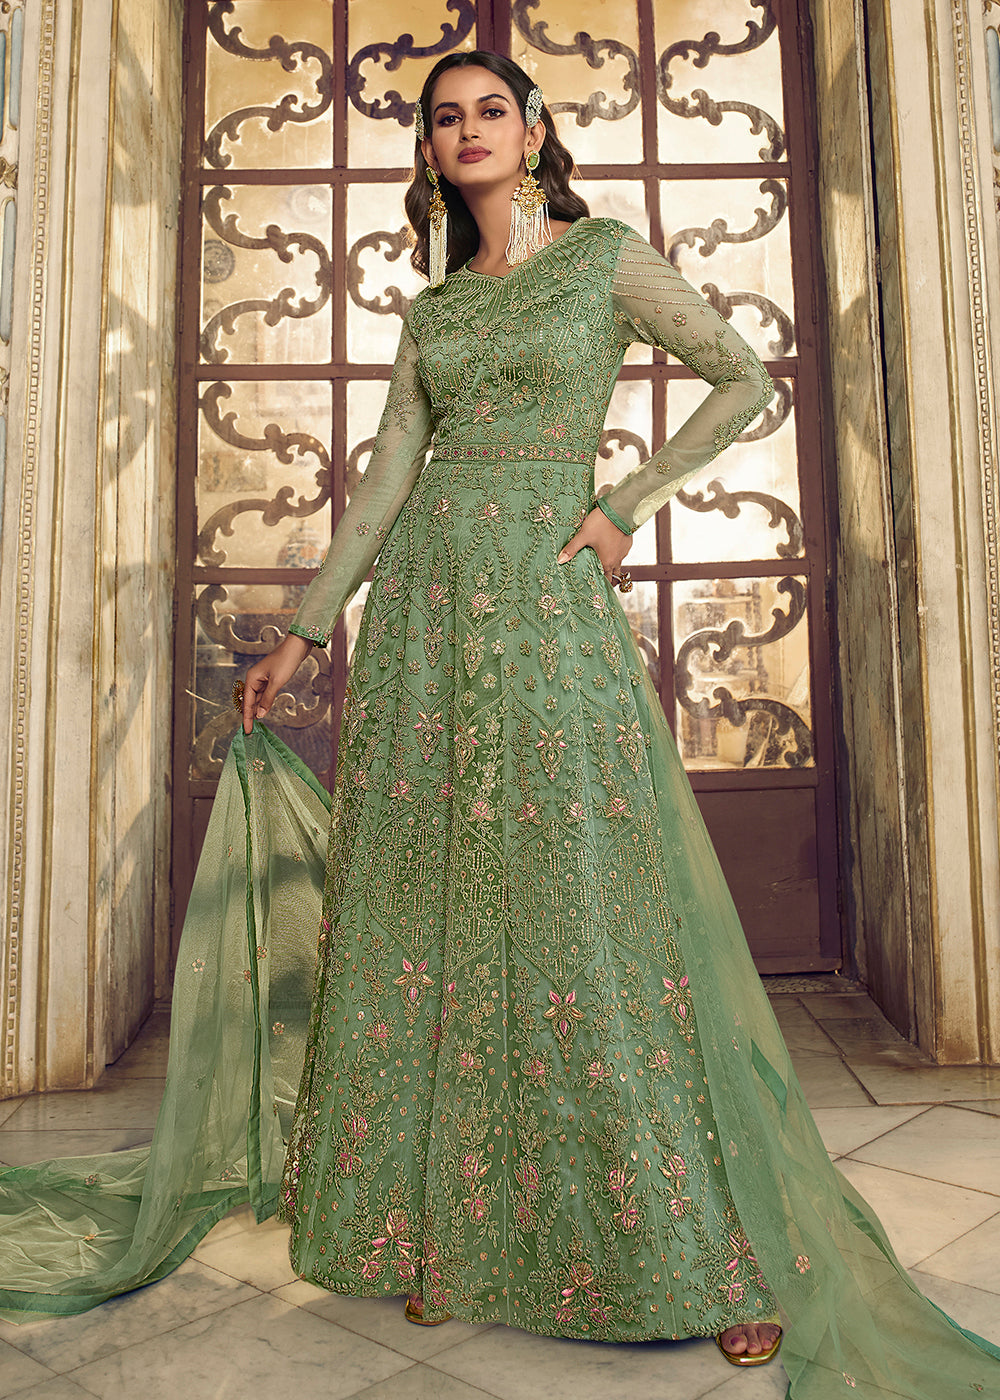 Buy Now Moss Green Wedding Party Net Designer Anarkali Suit Online in USA, UK, Australia, New Zealand, Canada & Worldwide at Empress Clothing.